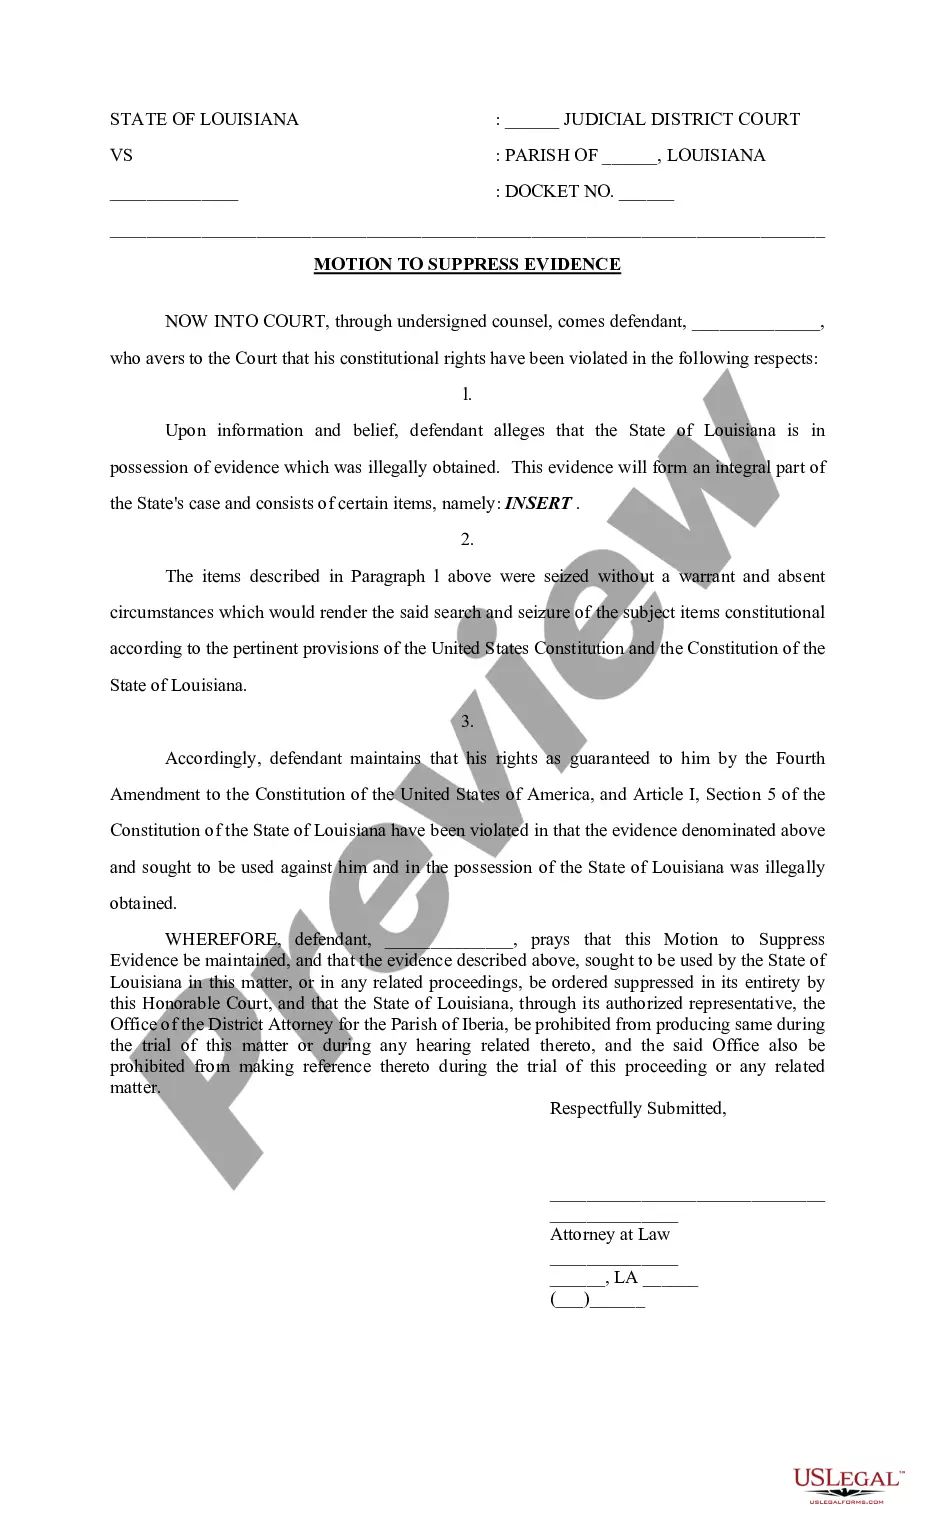 Louisiana Motion to Suppress Evidence Motion To Suppress Evidence